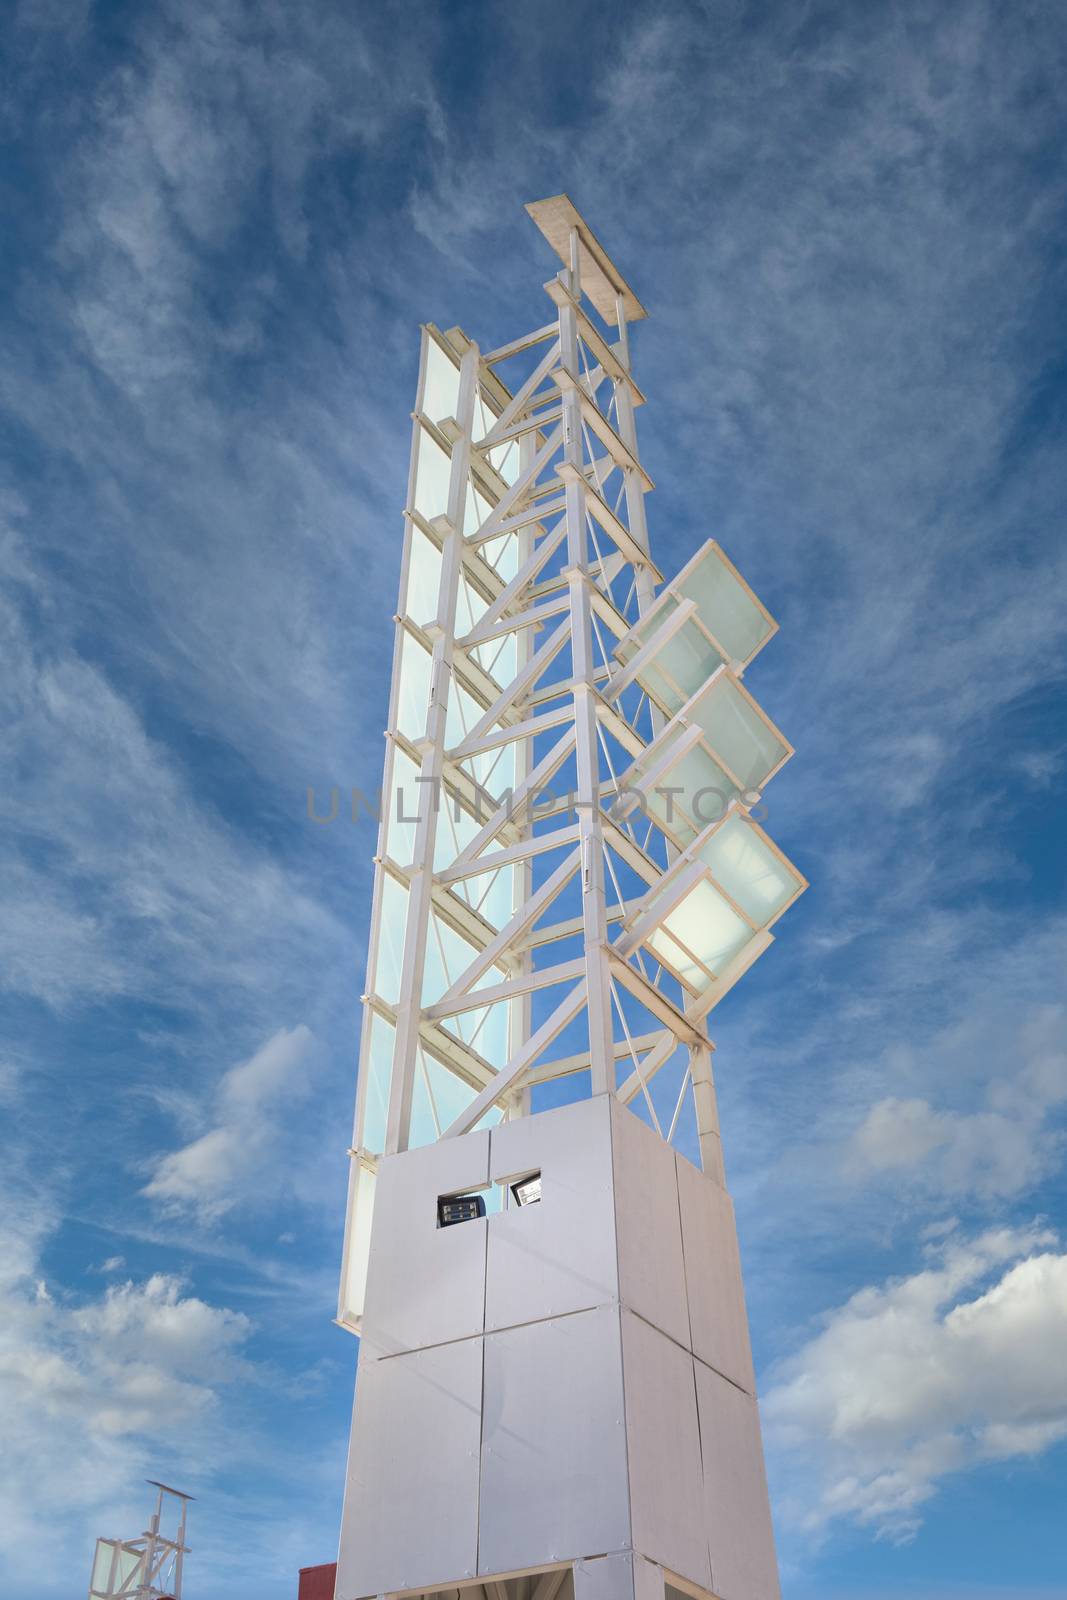 White Solar Tower on Sky by dbvirago